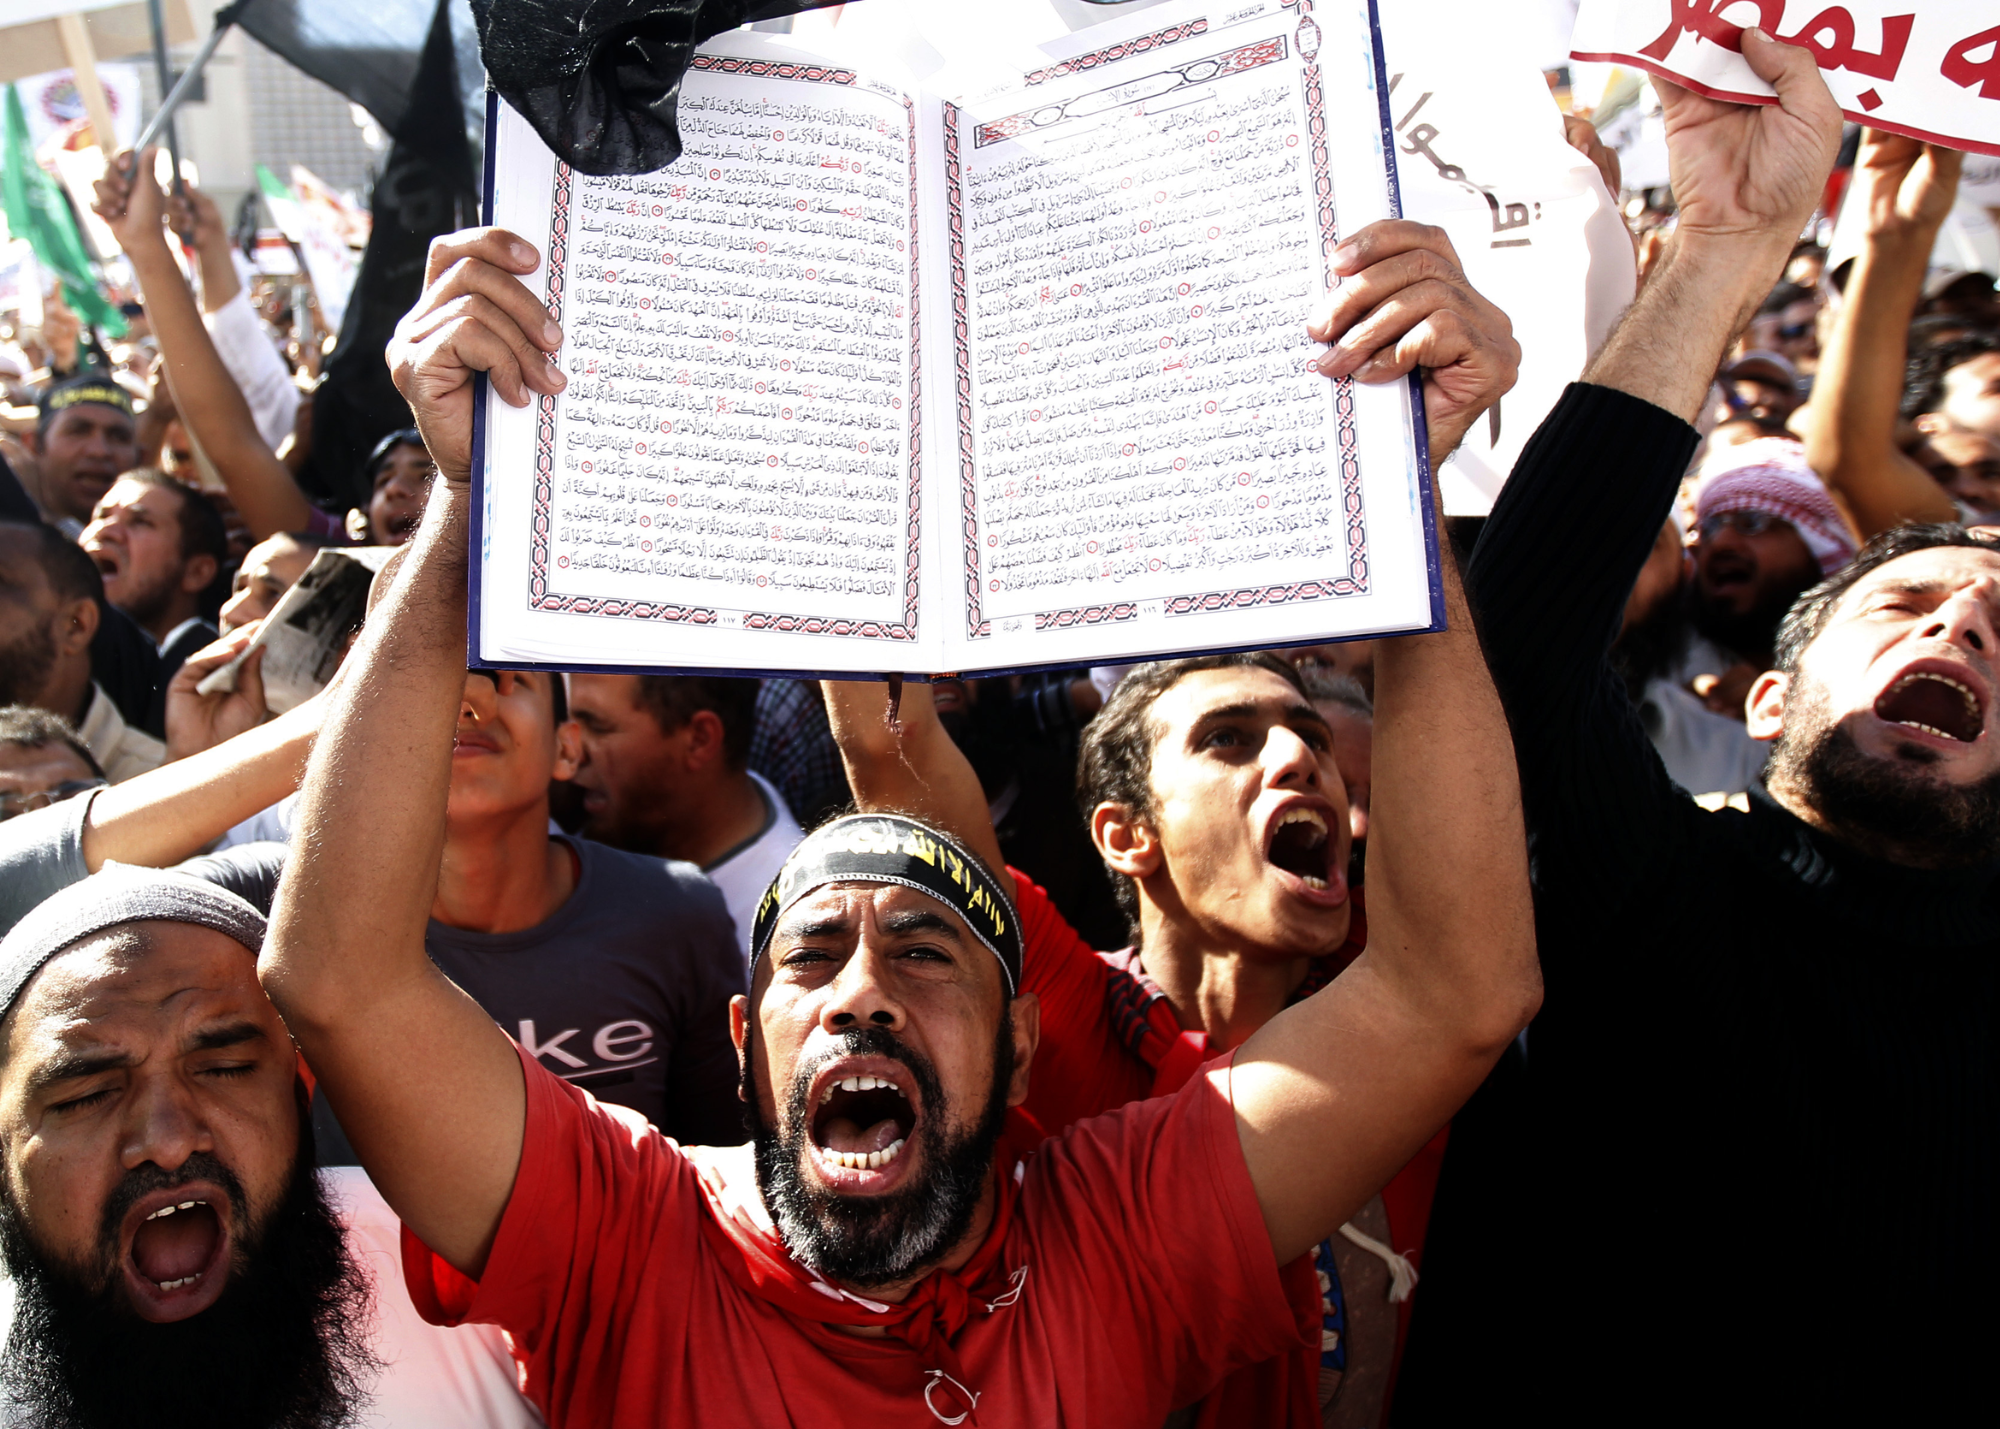 Salafi Groups In Egypt - Five Main Salafi Trends In Egypt